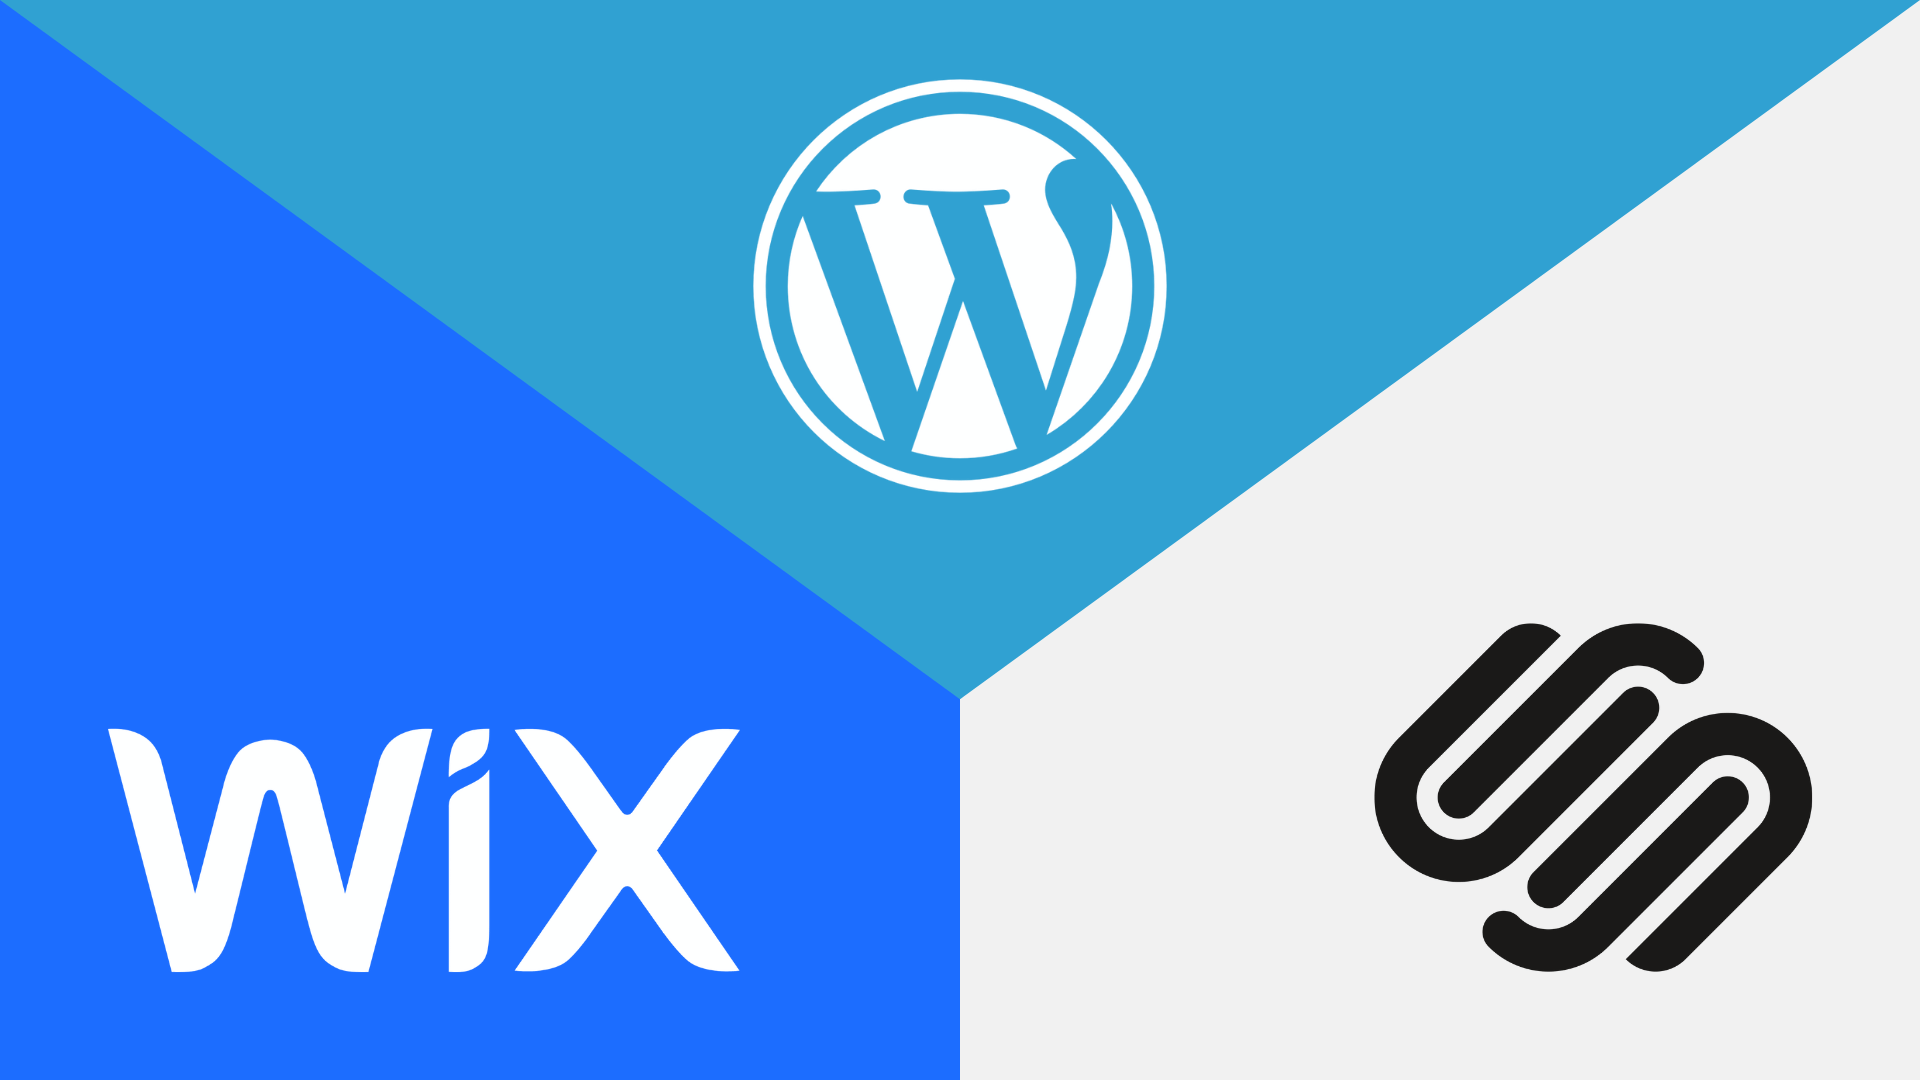 Wix vs Squarespace vs WordPress